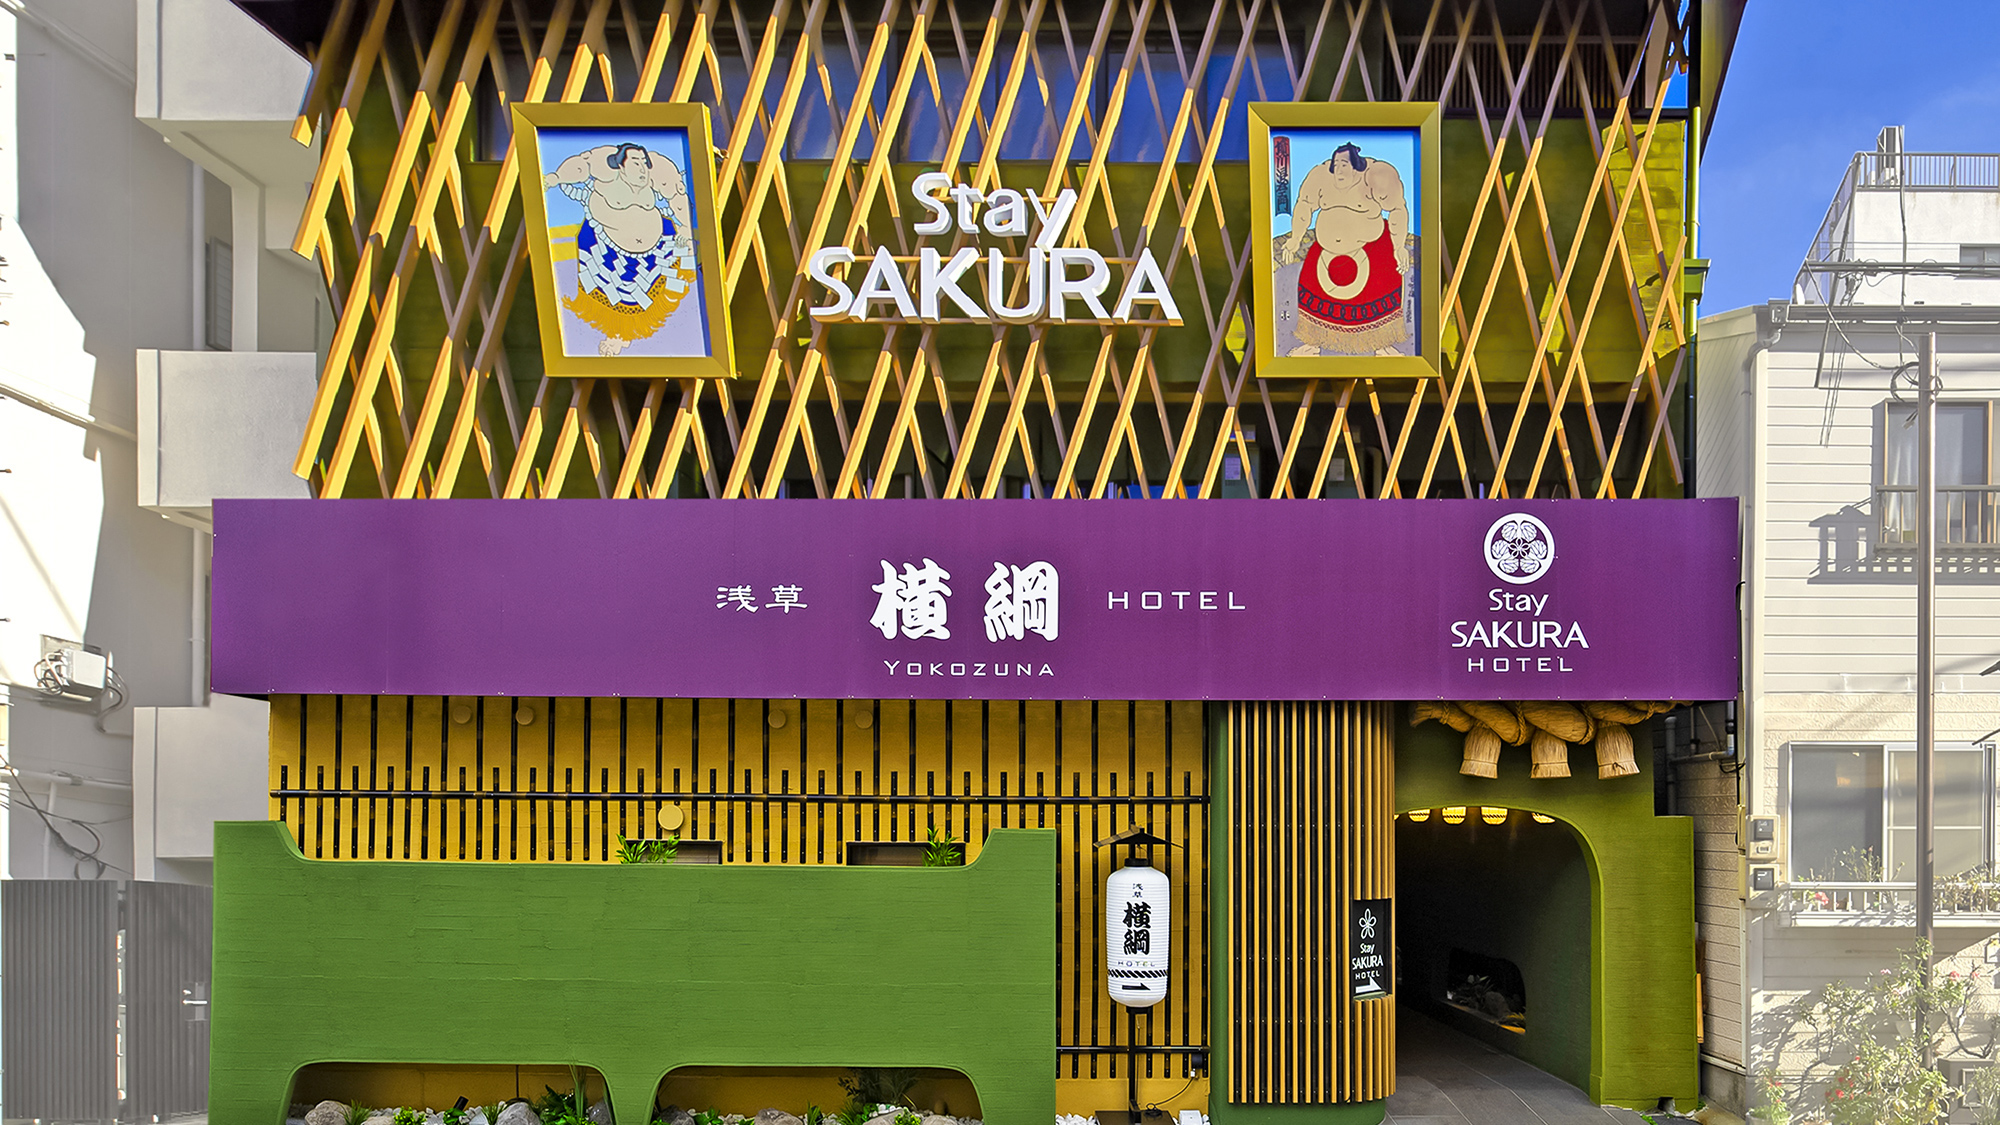 Stay SAKURA Tokyo 浅草 横綱 Hotel